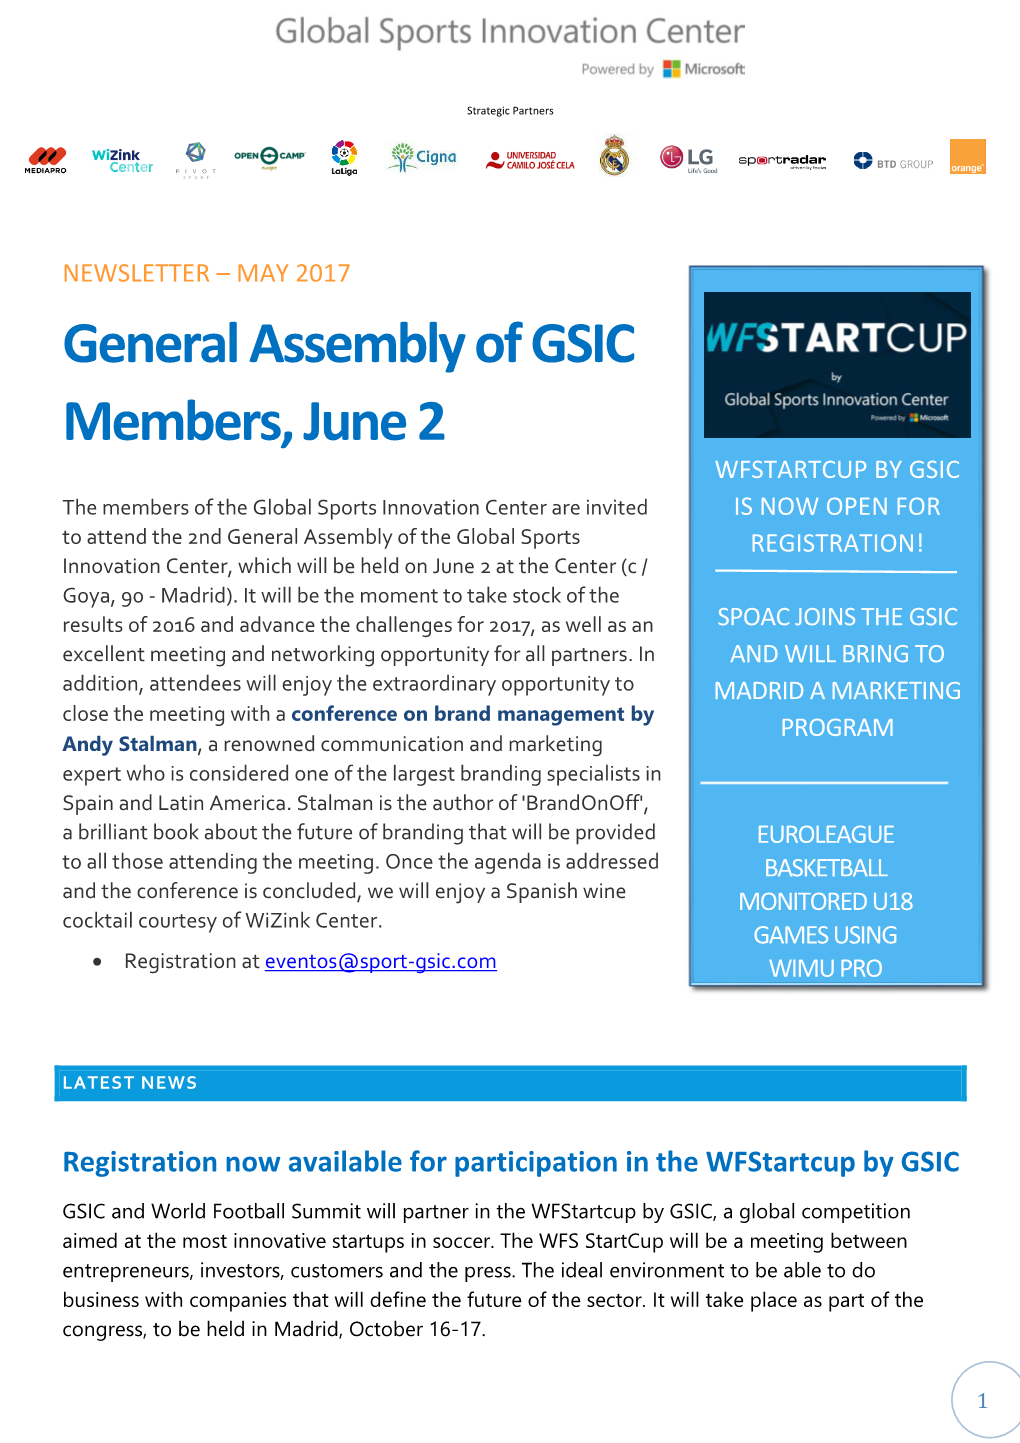 General Assembly of GSIC Members, June 2